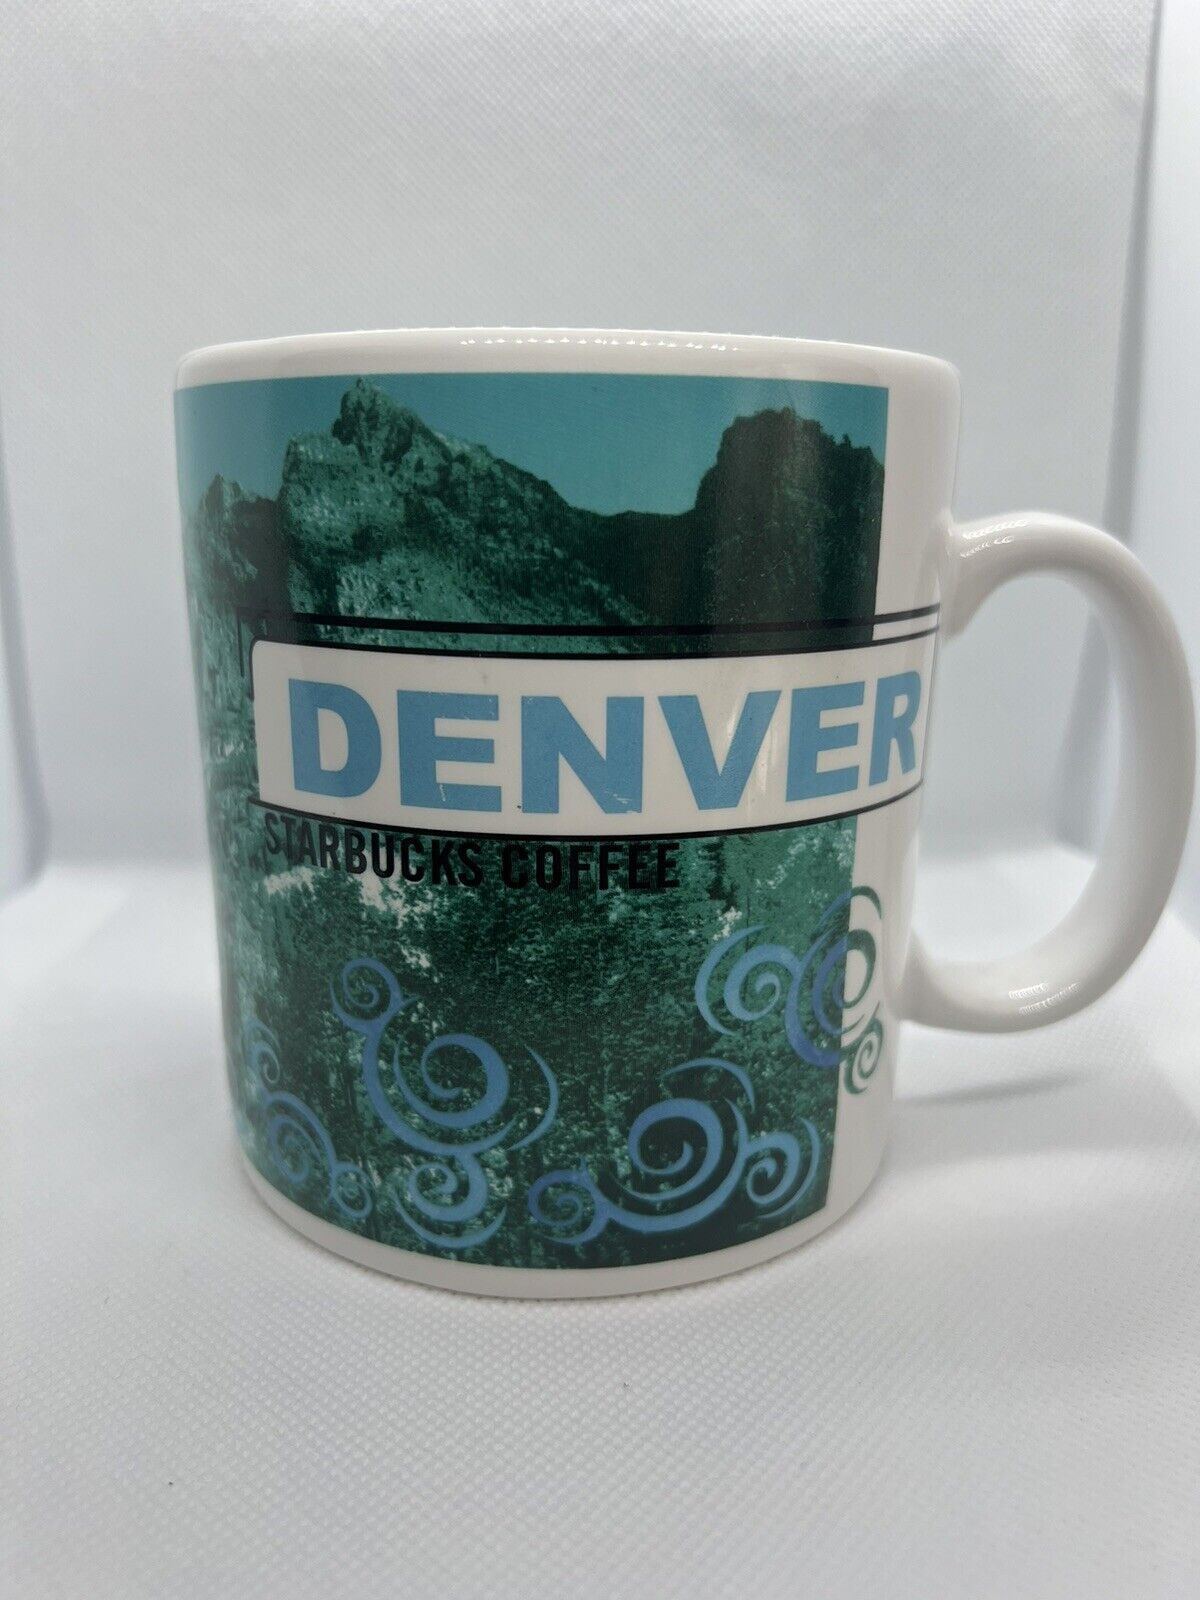 Denver Starbucks Coffee 1999 Vintage Mug 18 fl oz